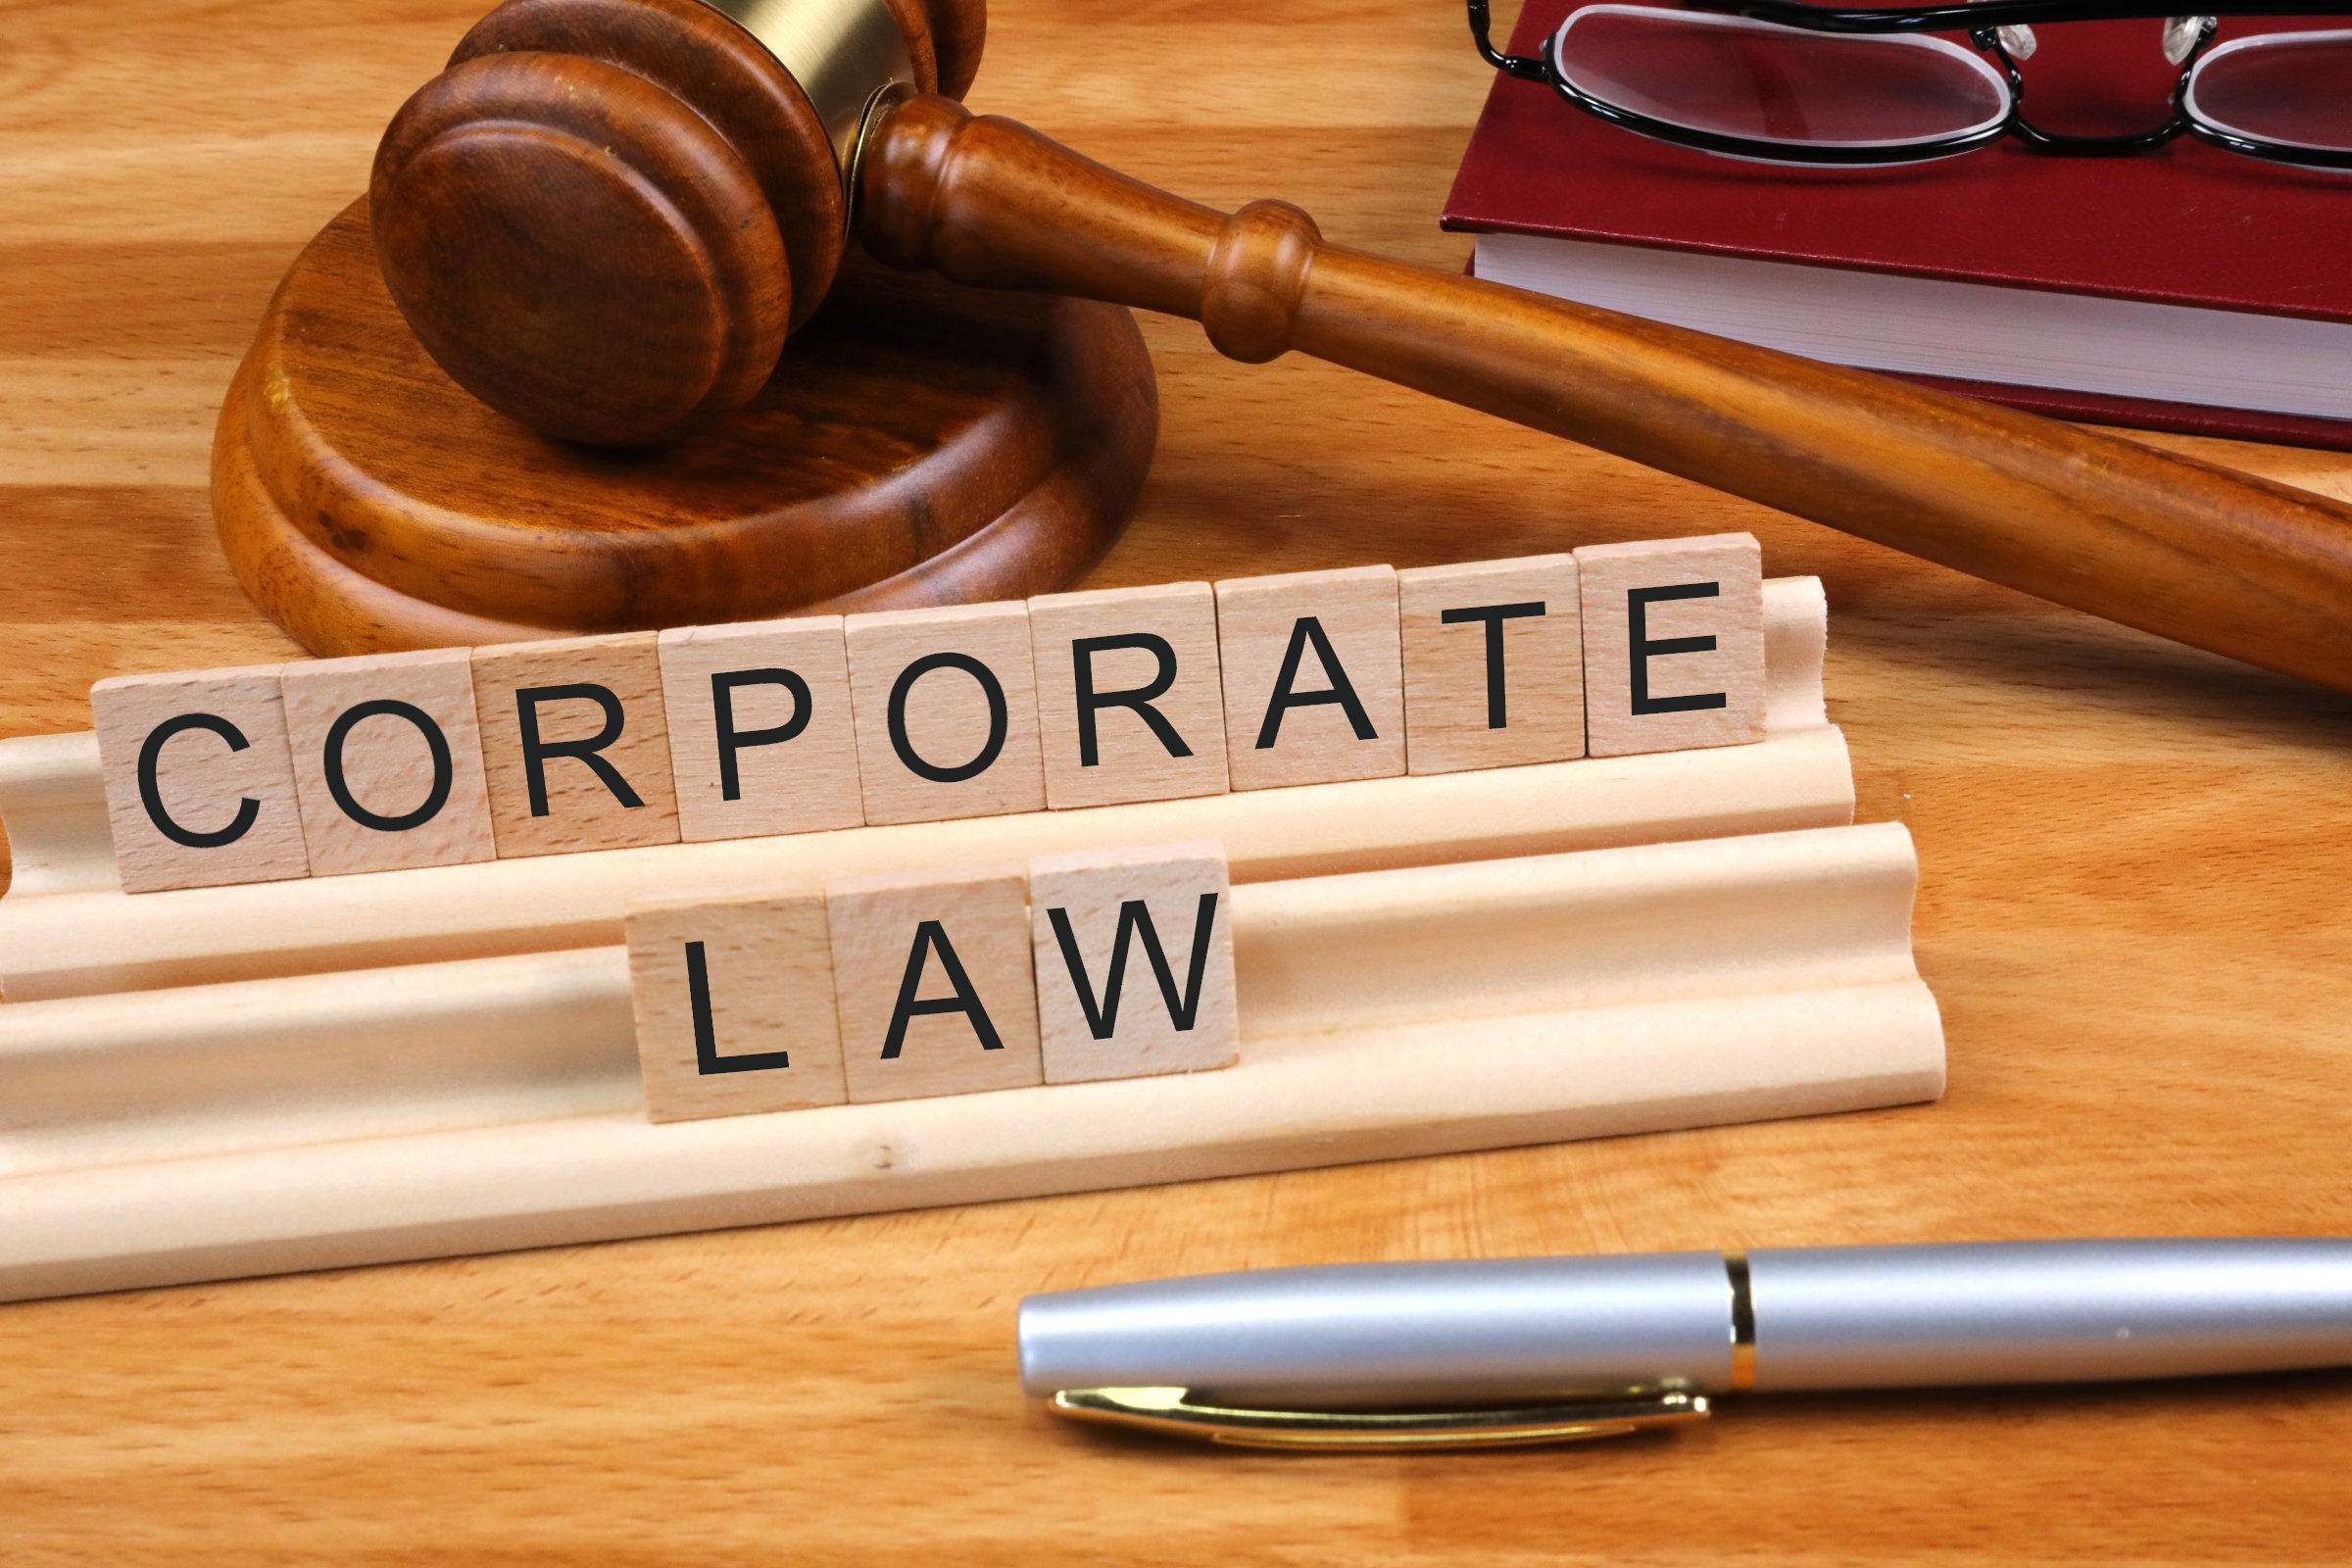 corporate law